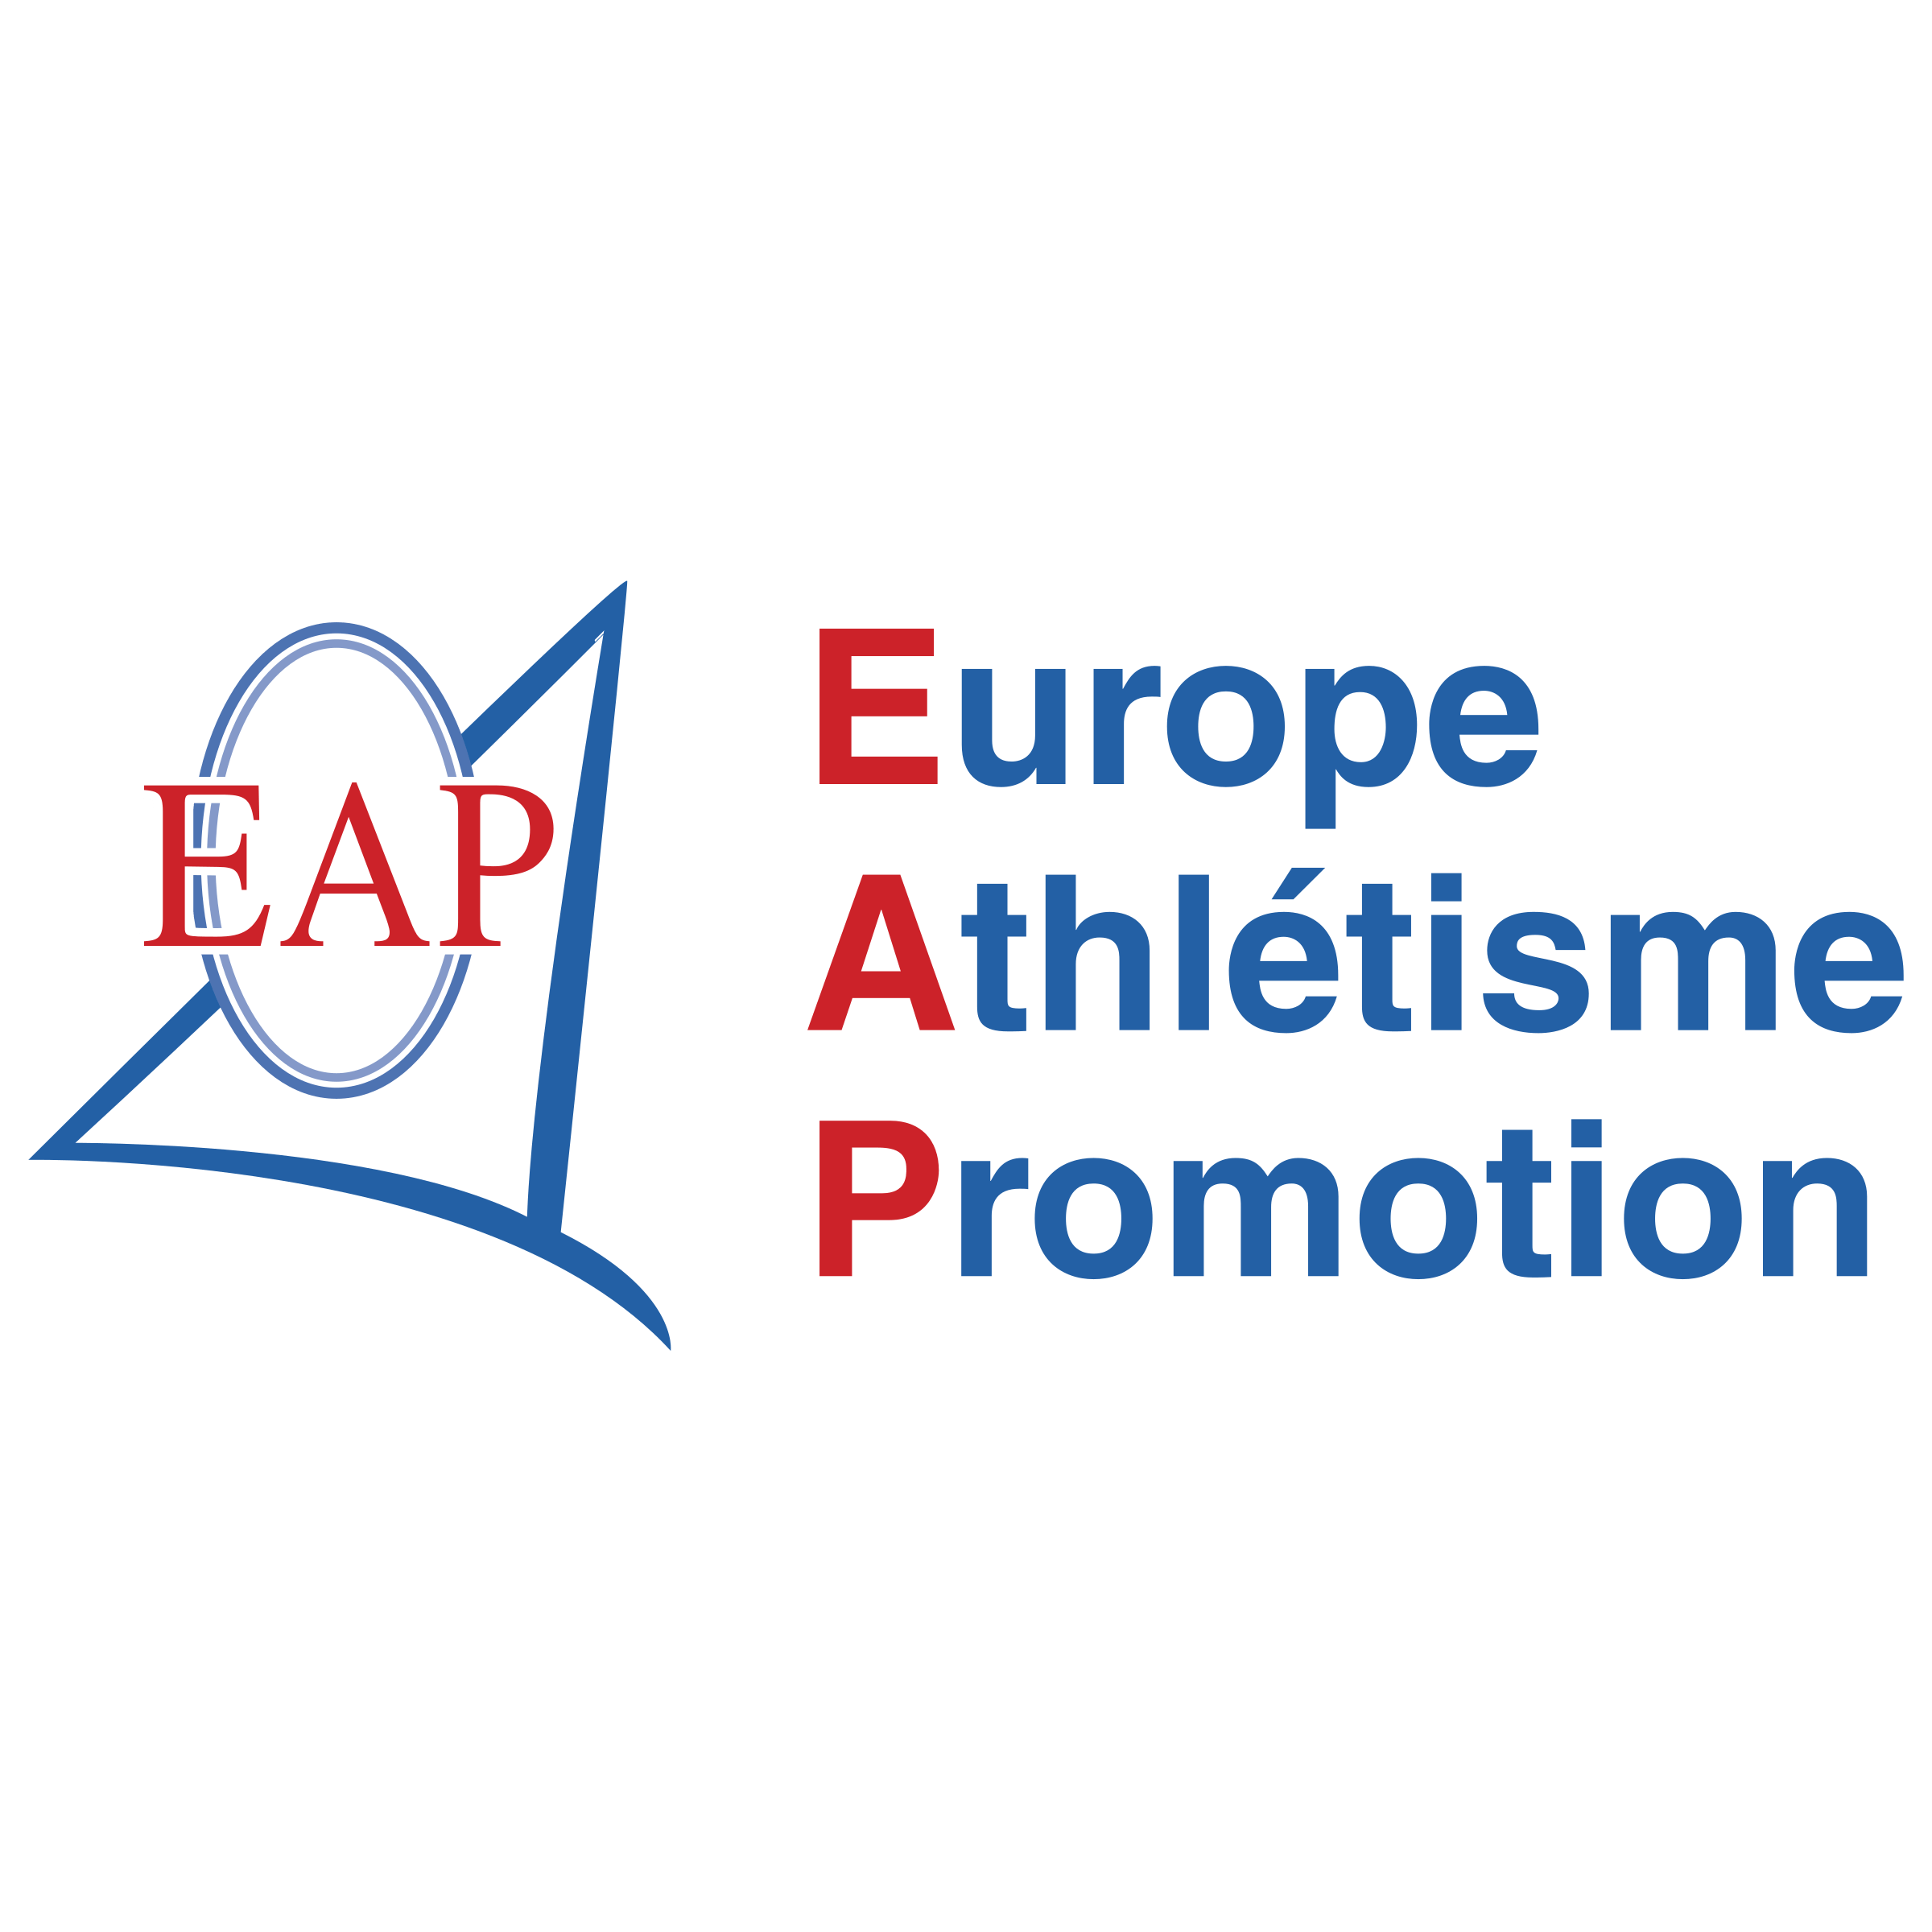 EAP Logo - EAP Logo PNG Transparent & SVG Vector - Freebie Supply